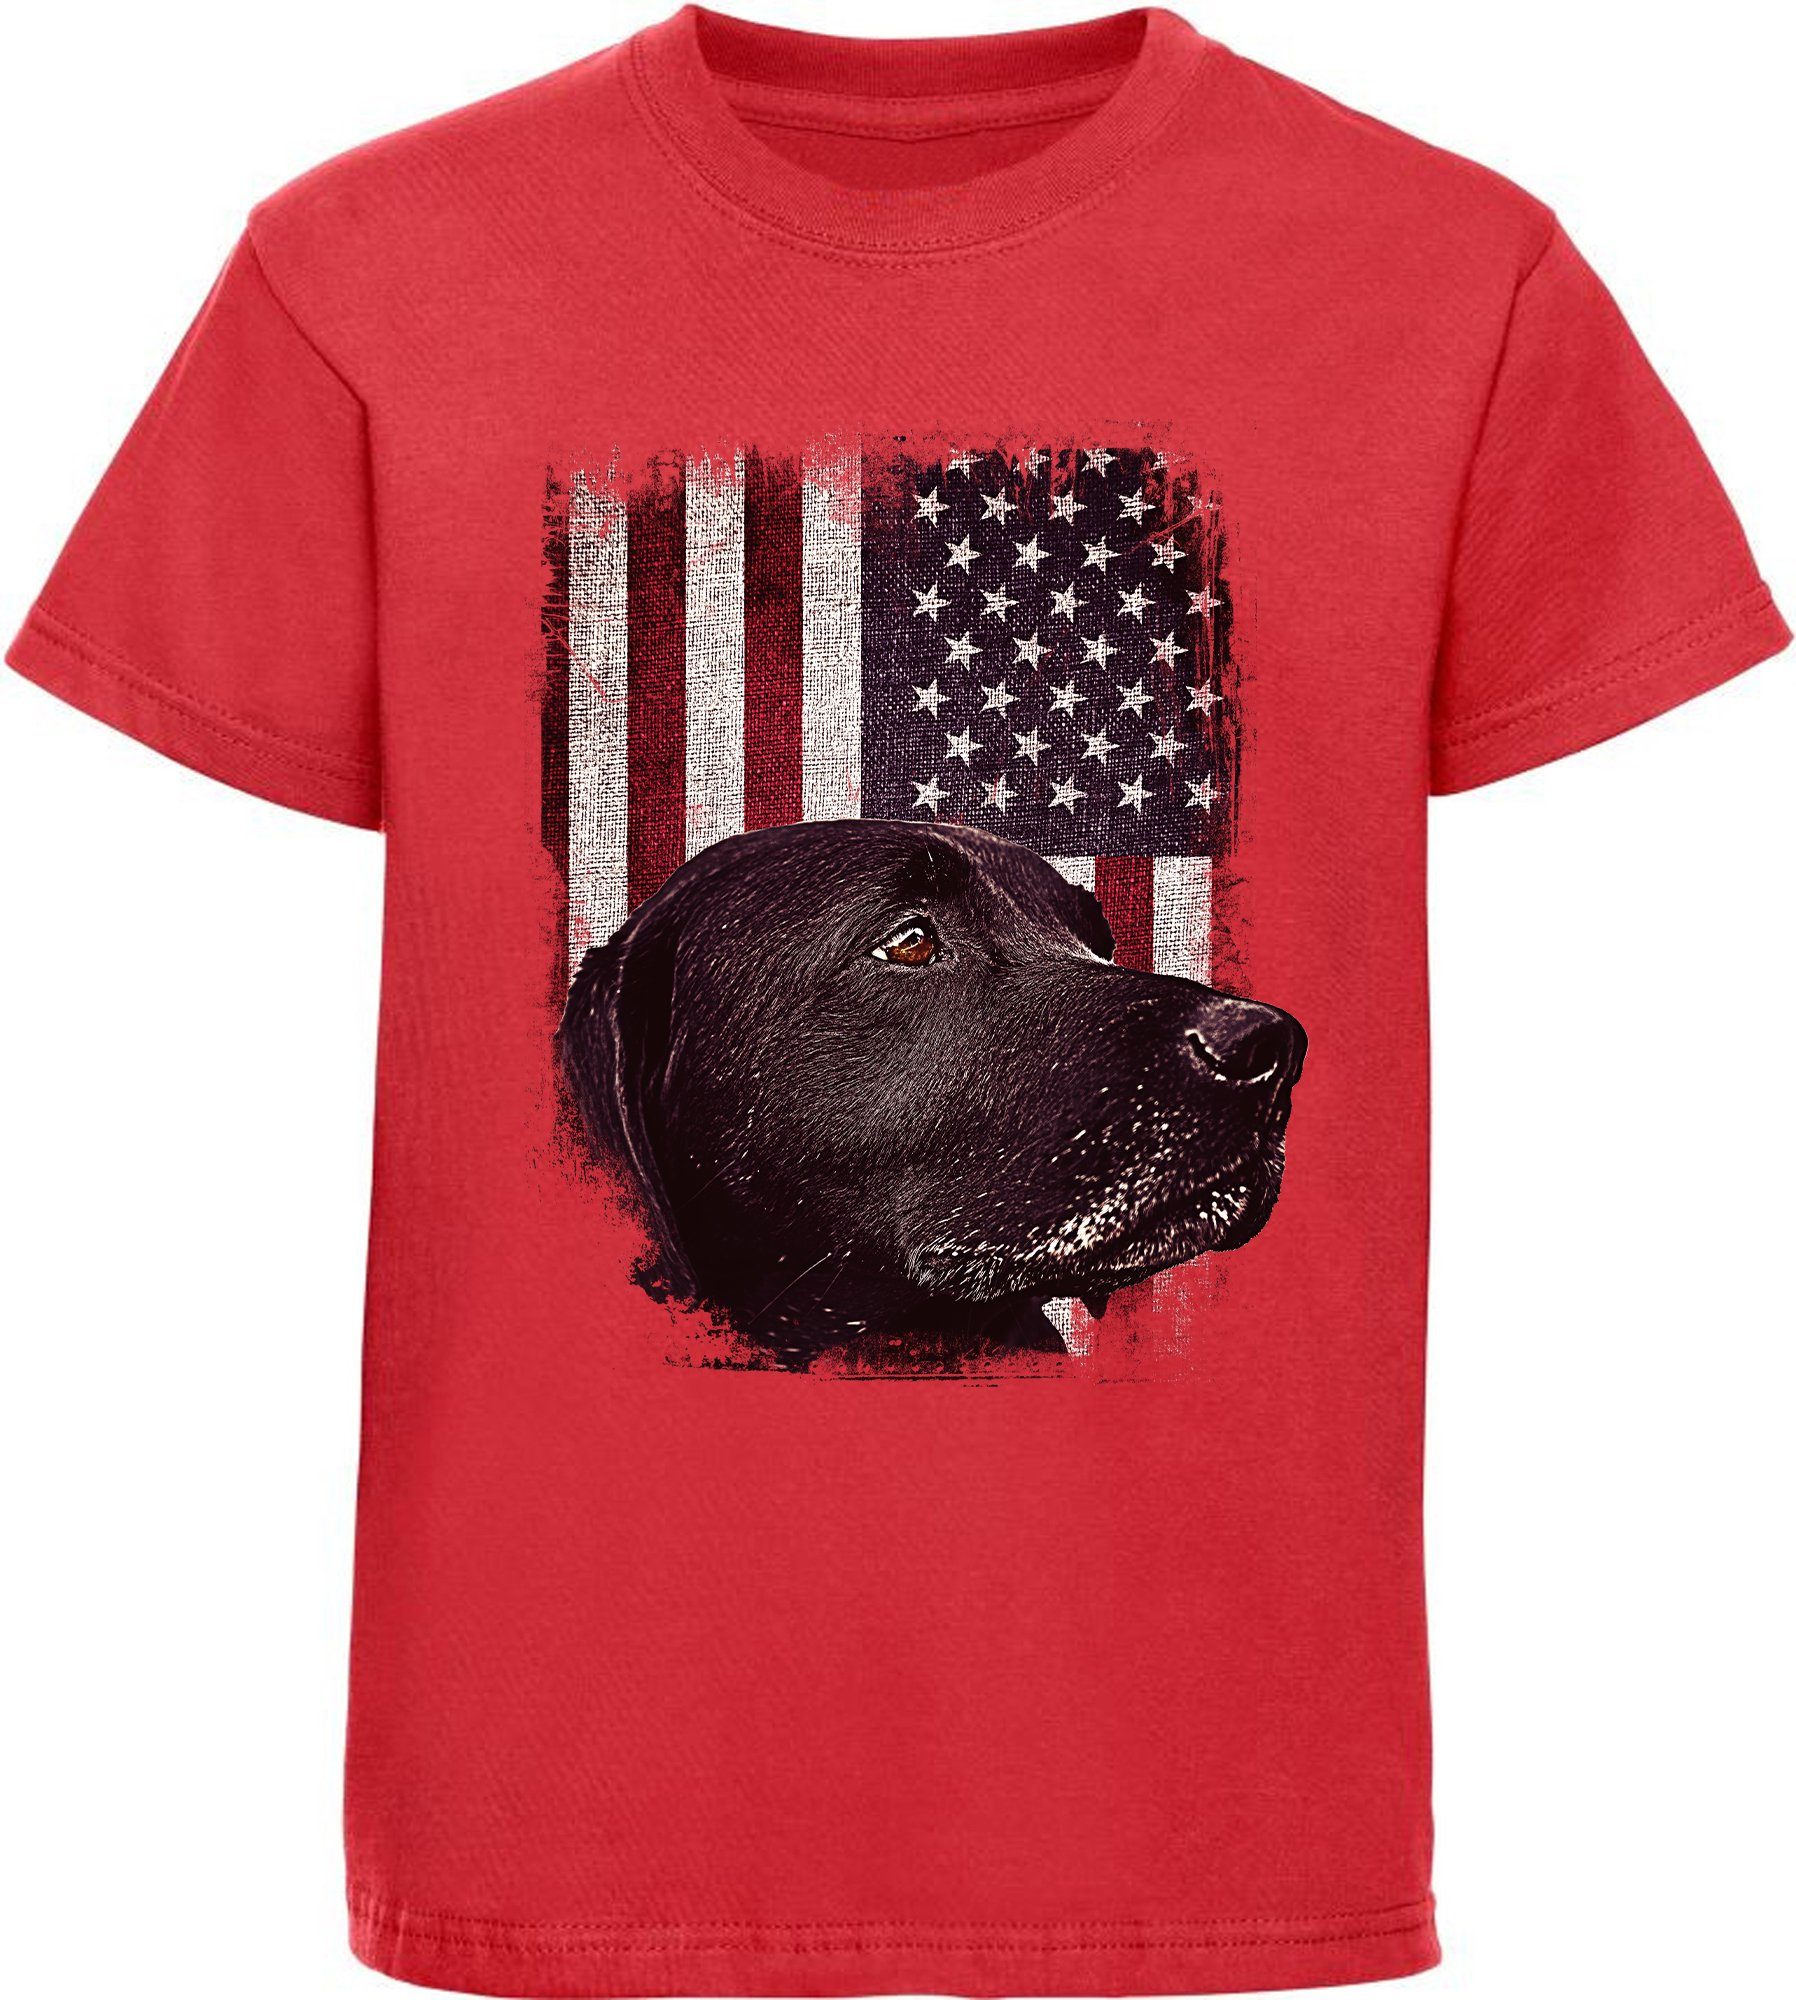 MyDesign24 T-Shirt Kinder Hunde Print Shirt bedruckt - schwarzer Labrador vor USA Flagge Baumwollshirt mit Aufdruck, i246 rot